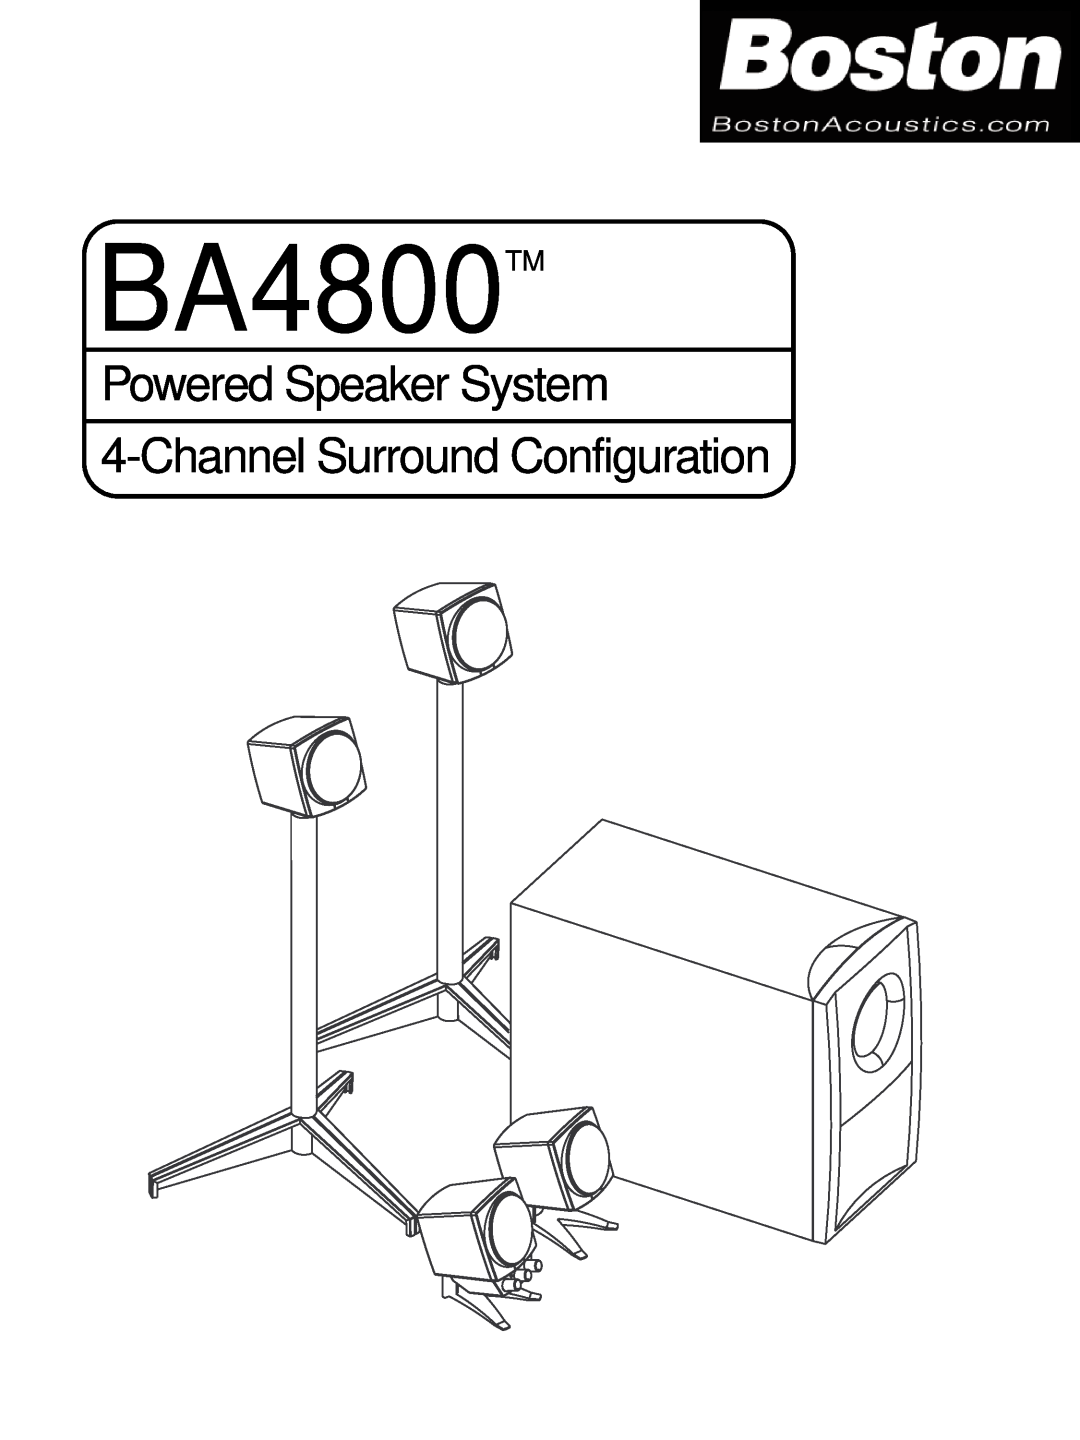 Boston Acoustics manual BA4800TM, Powered Speaker System, ChannelSurround Configuration 